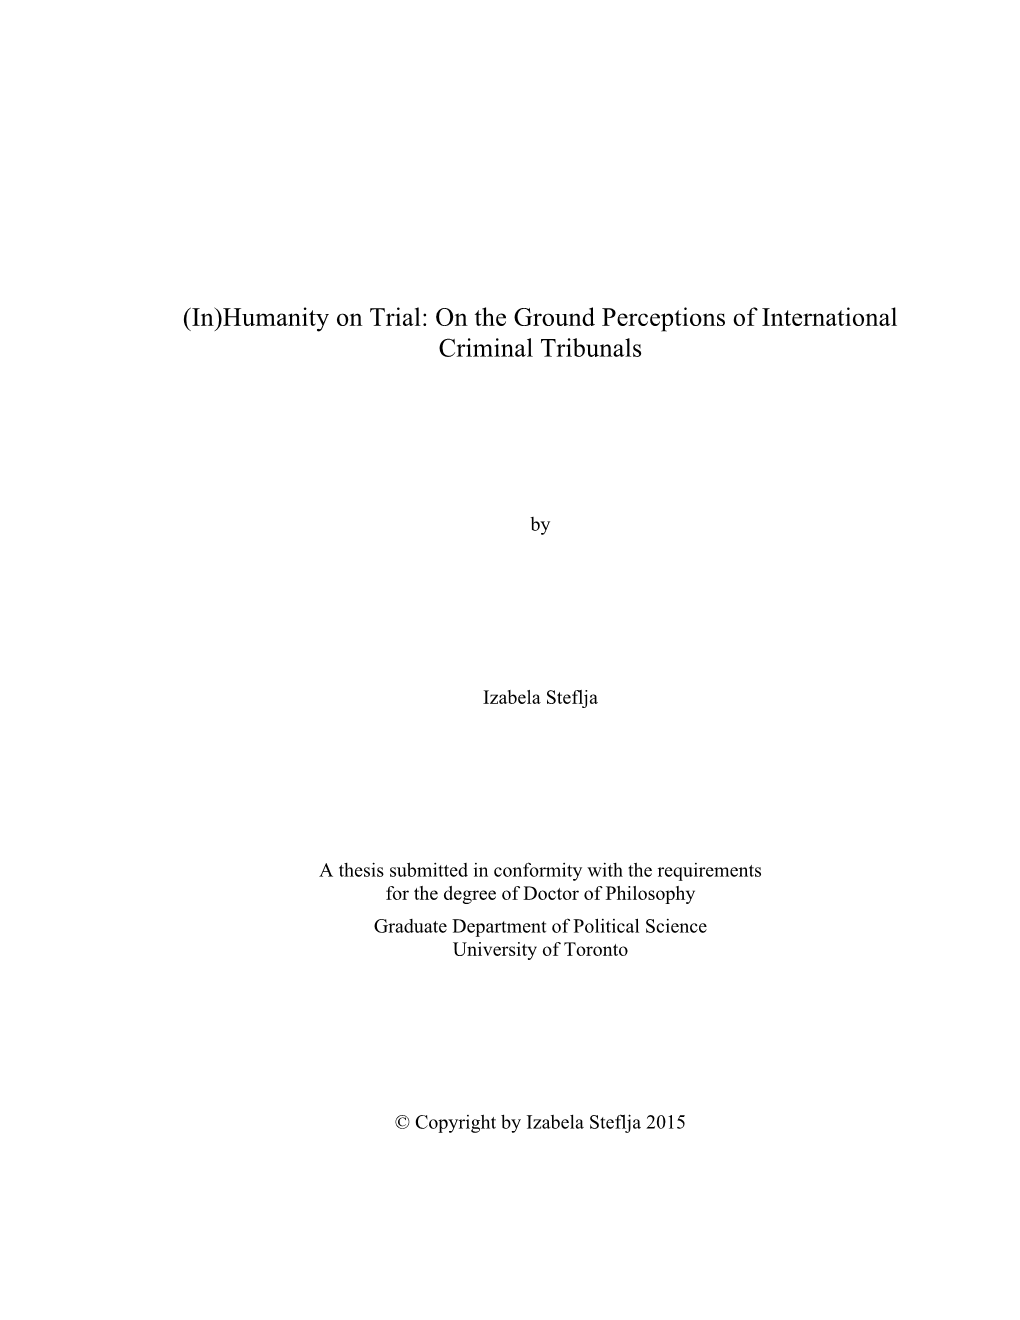 On the Ground Perceptions of International Criminal Tribunals